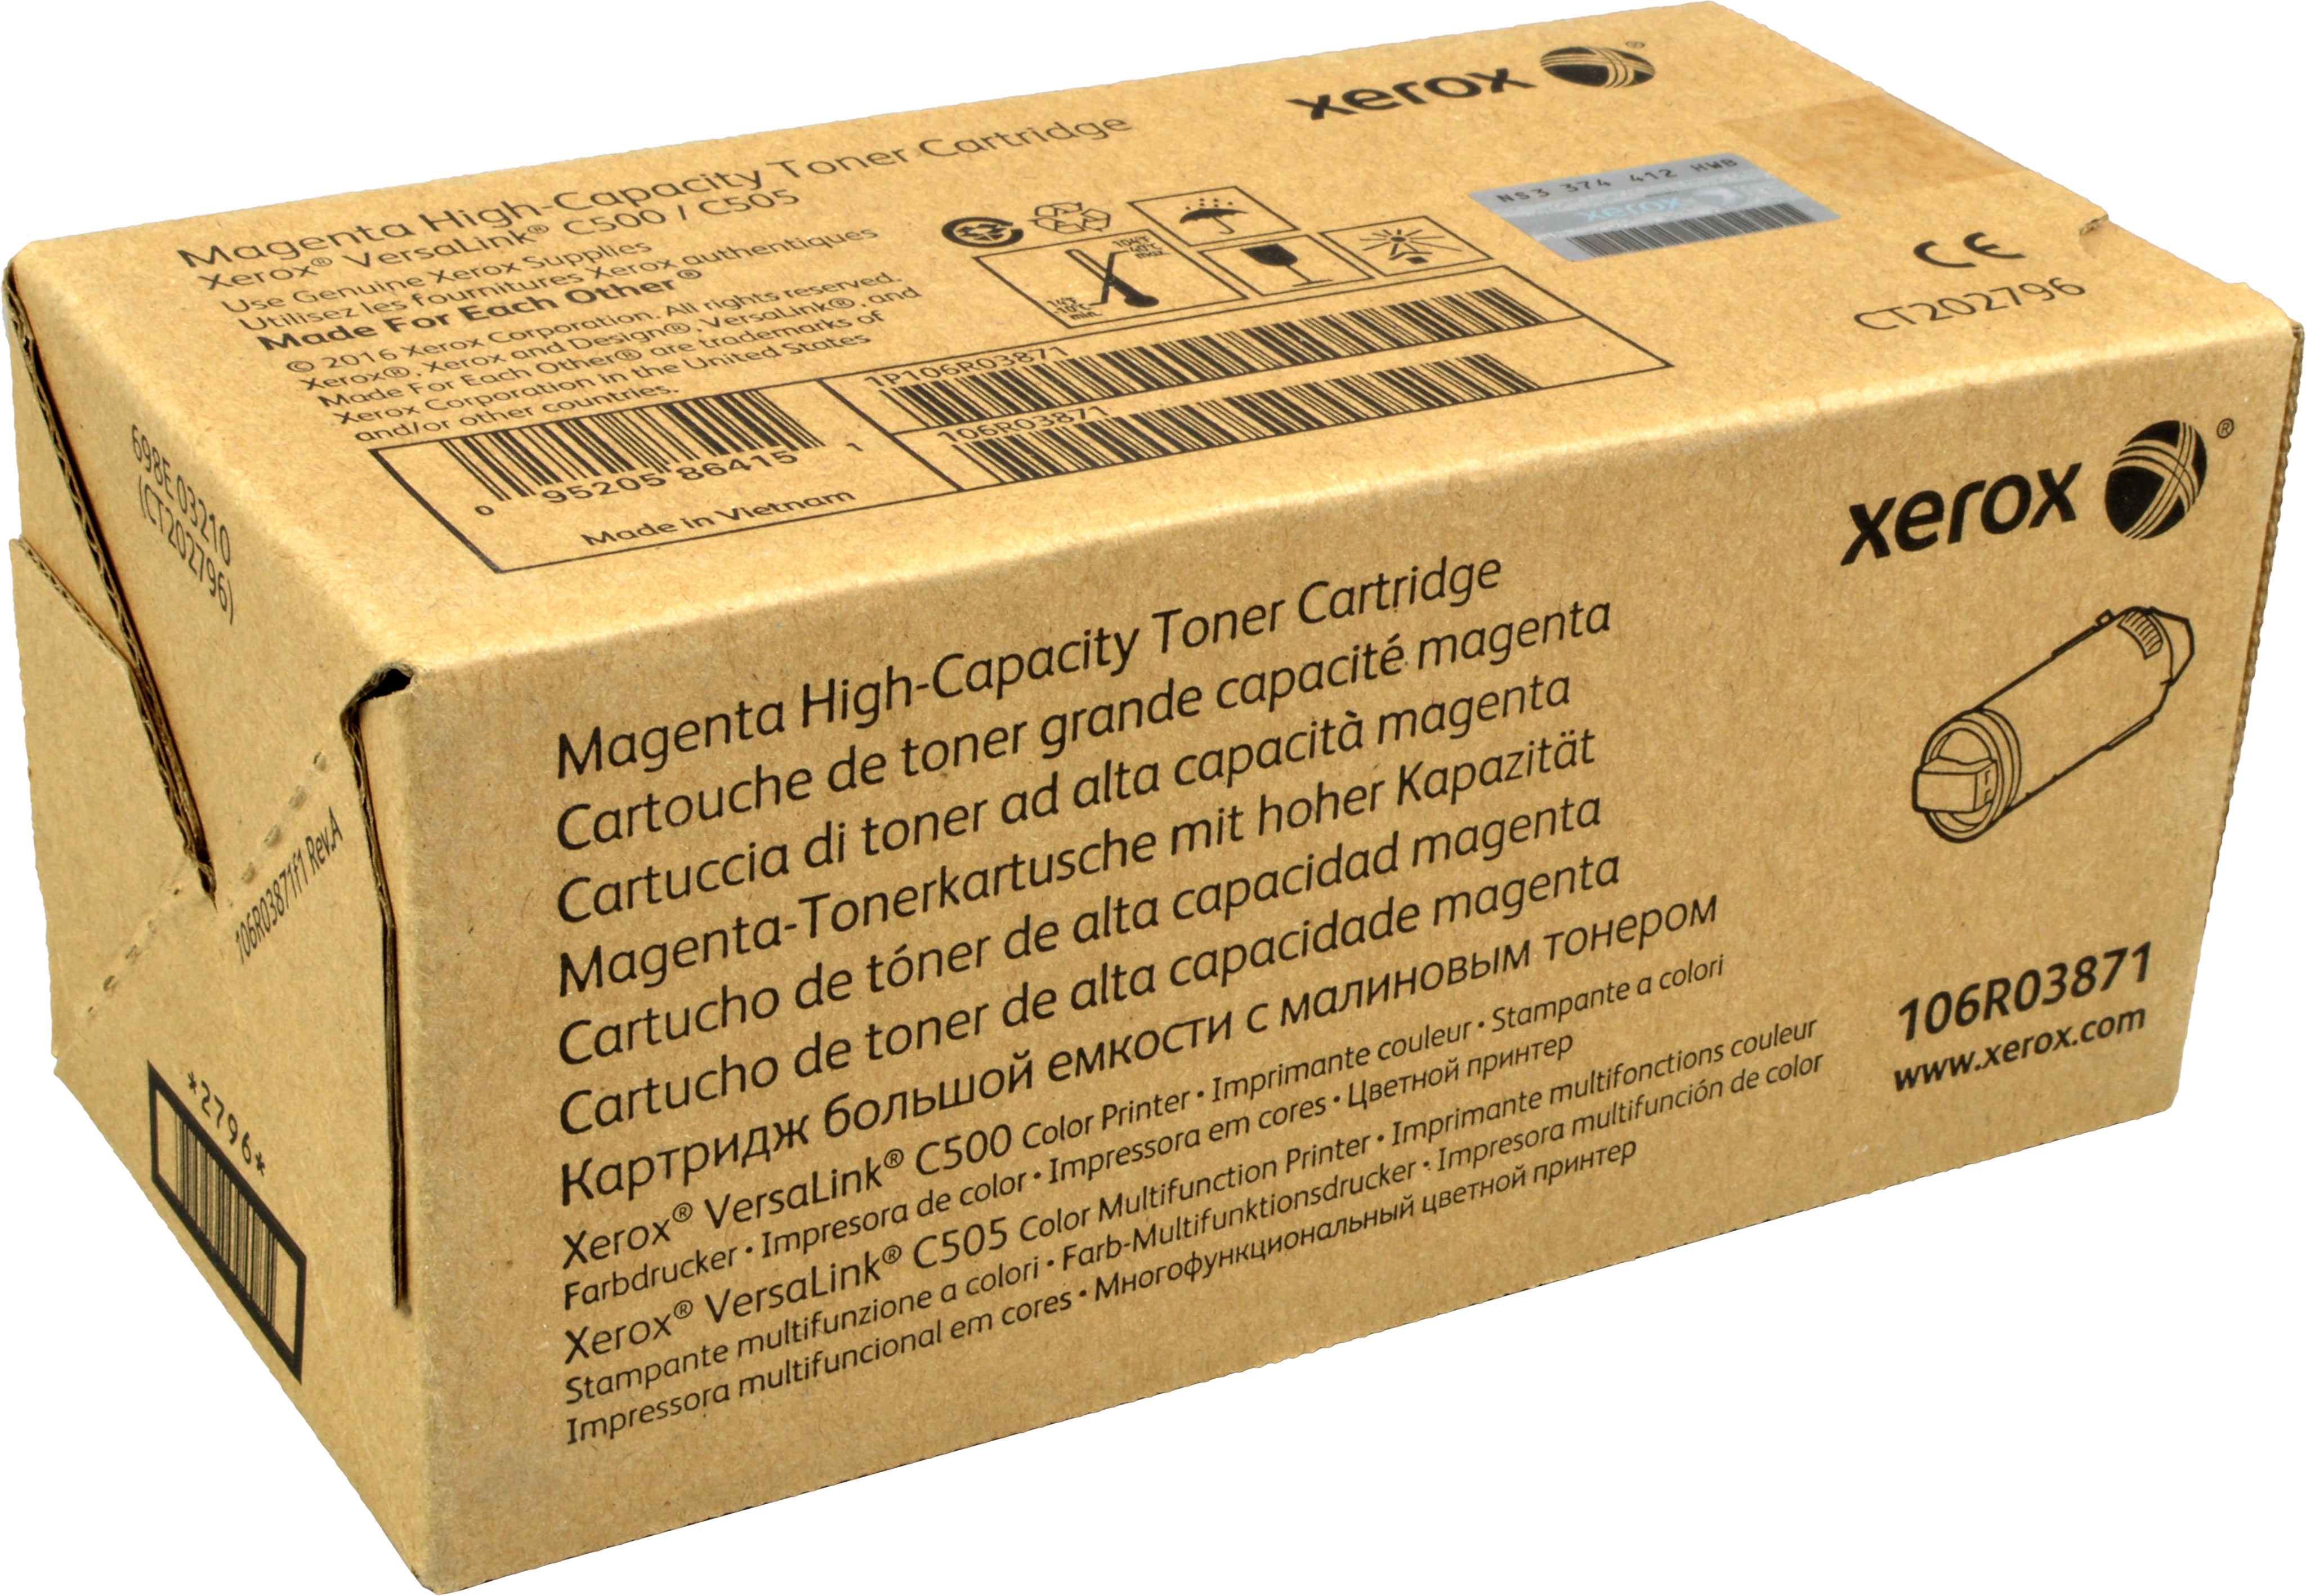 Xerox Toner 106R03871  magenta